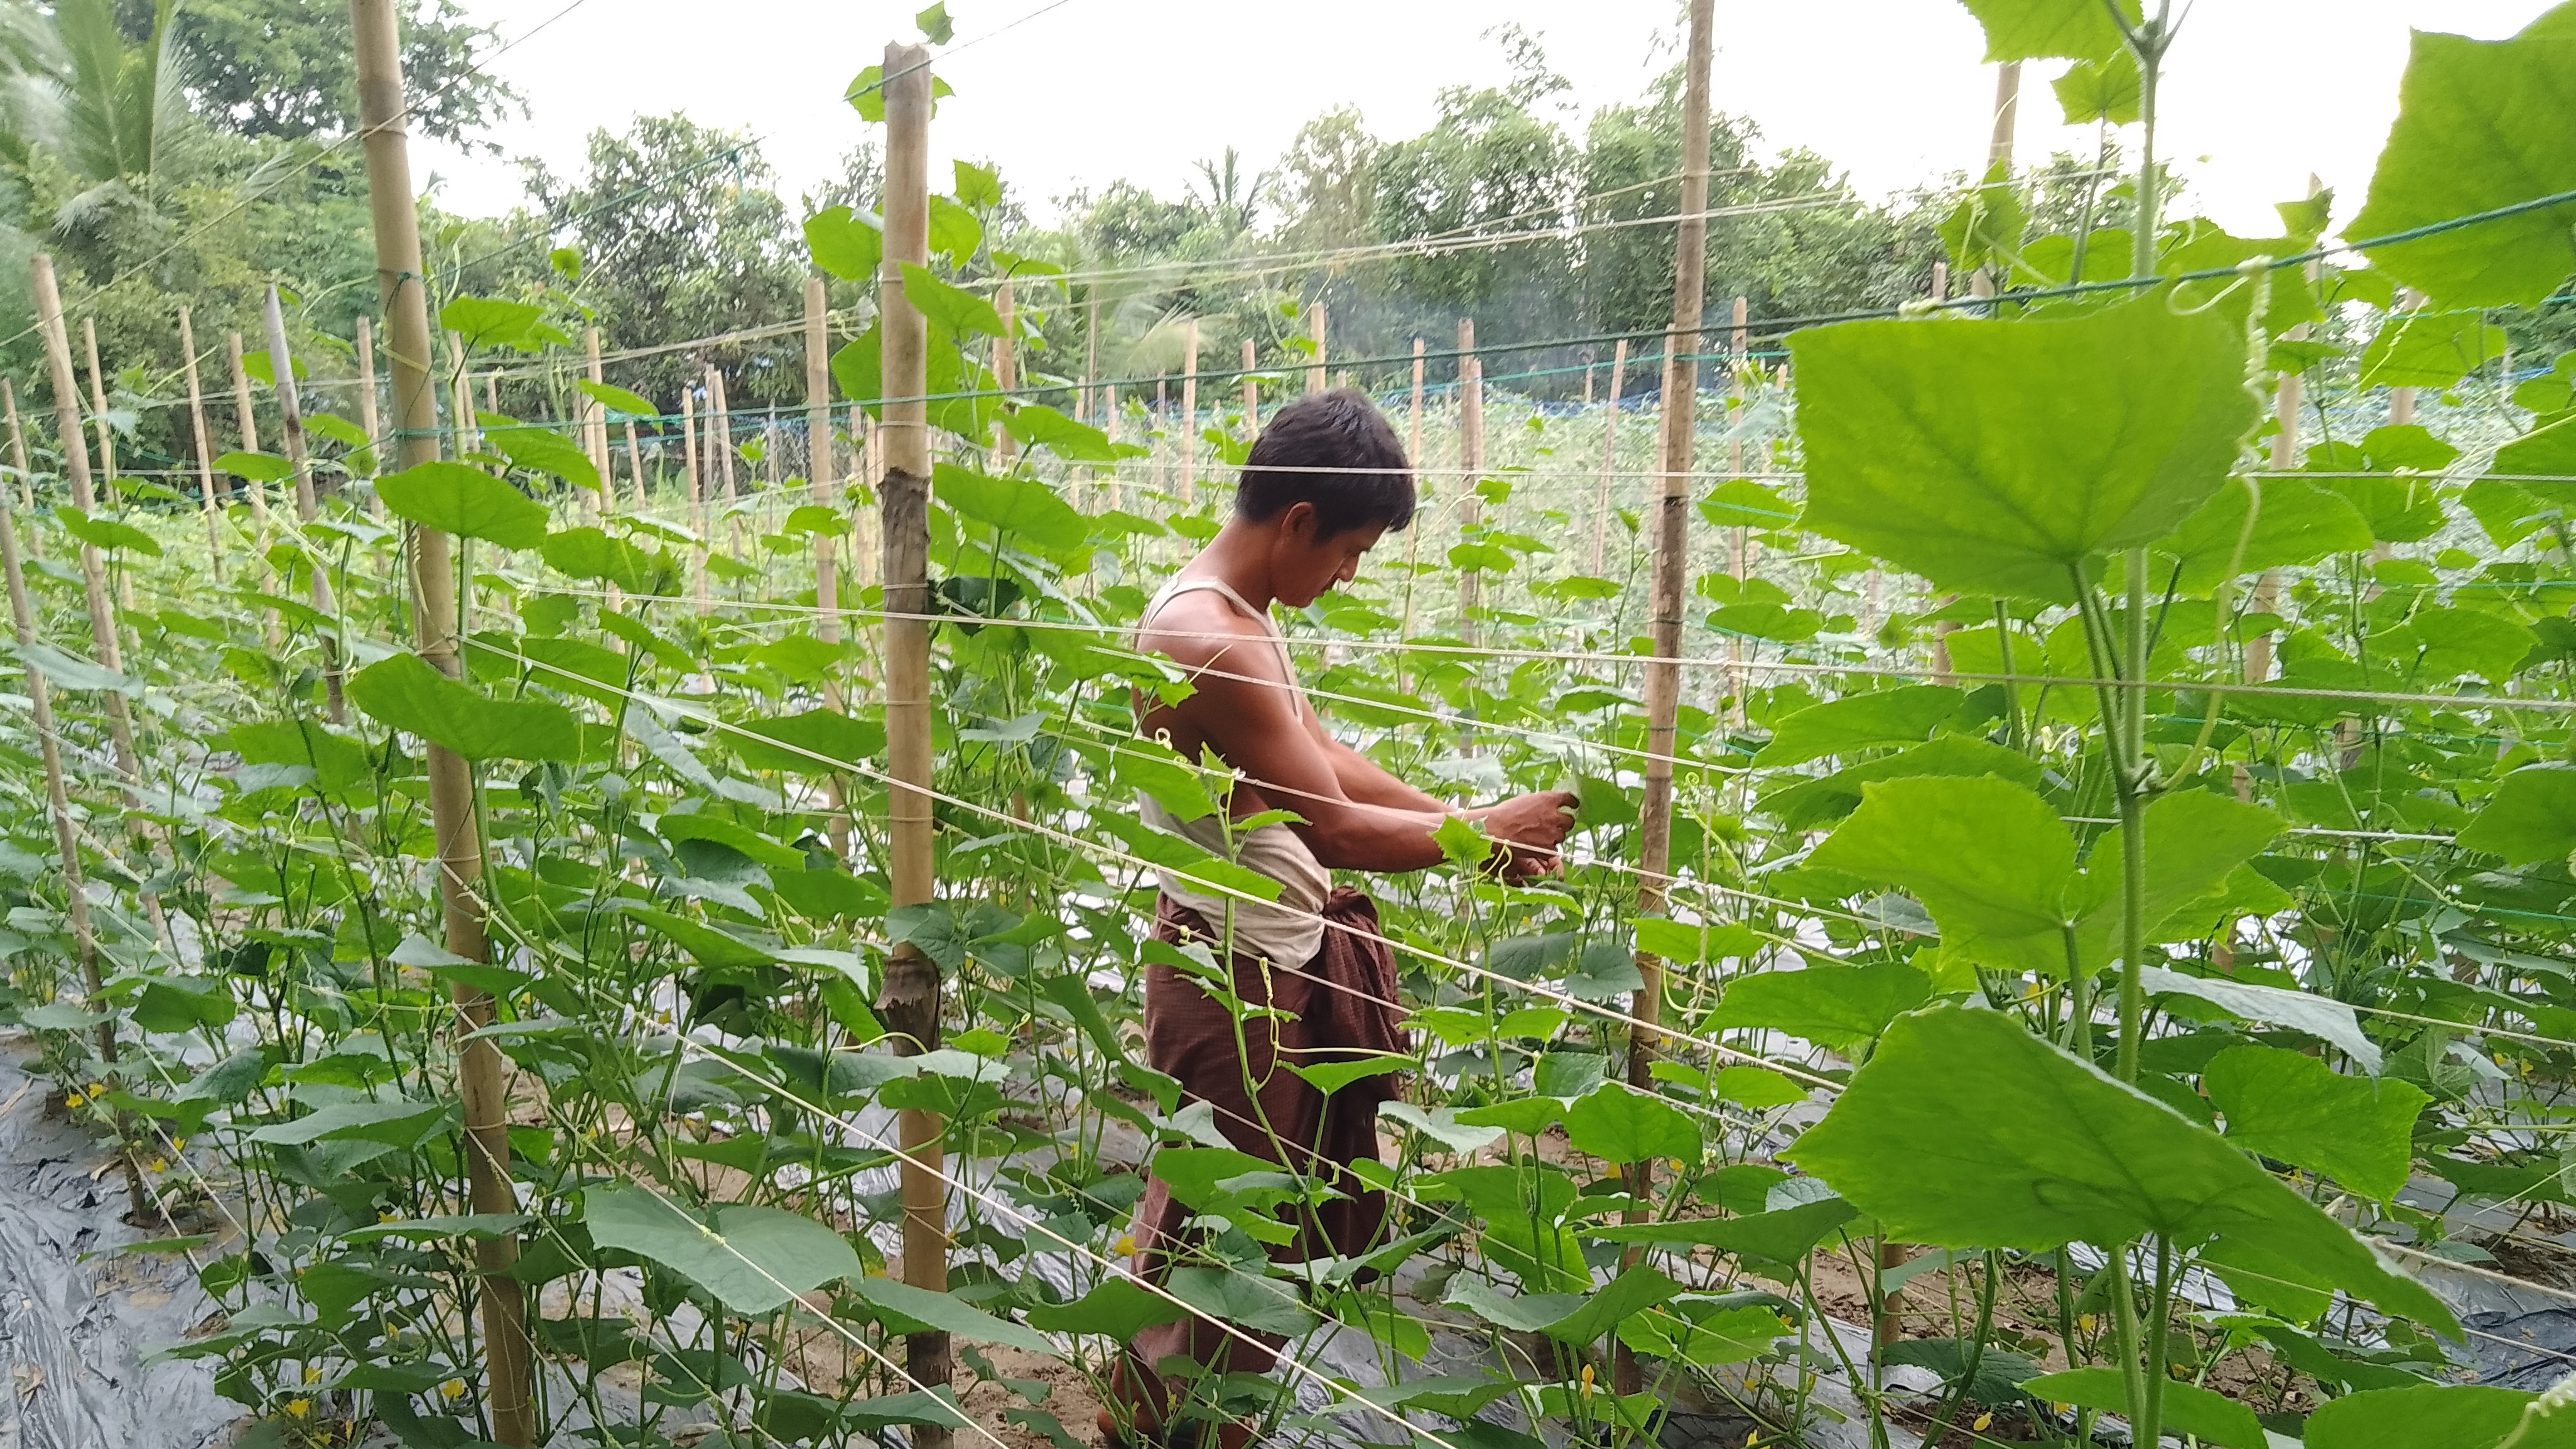 A farmer in Myanmar checks on his plants